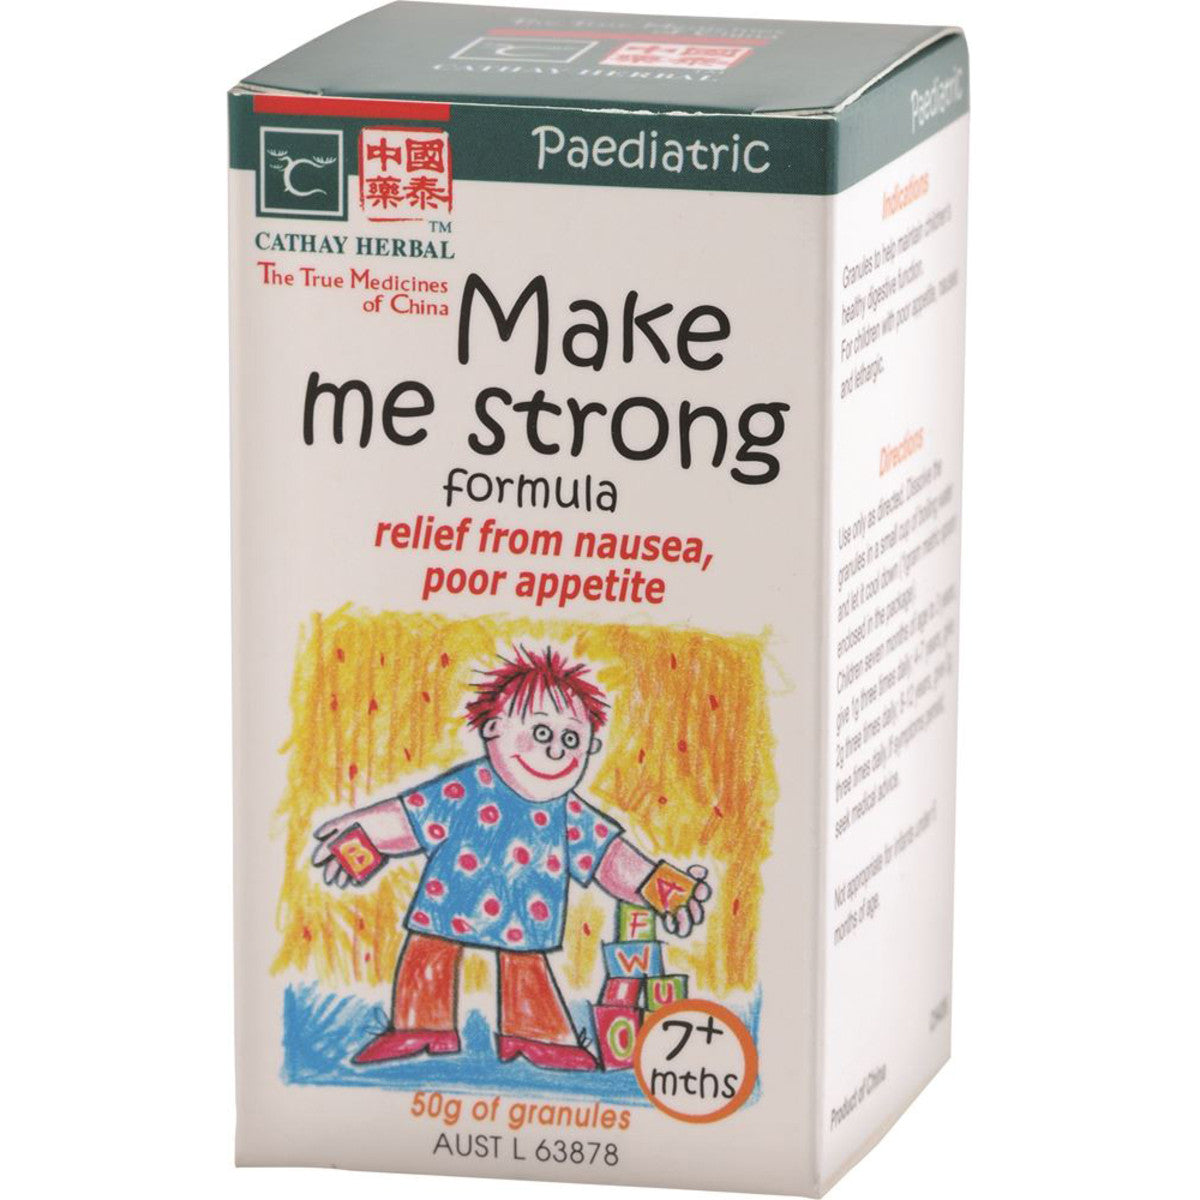 Cathay Herbal - Paediatric Make Me Strong Formula